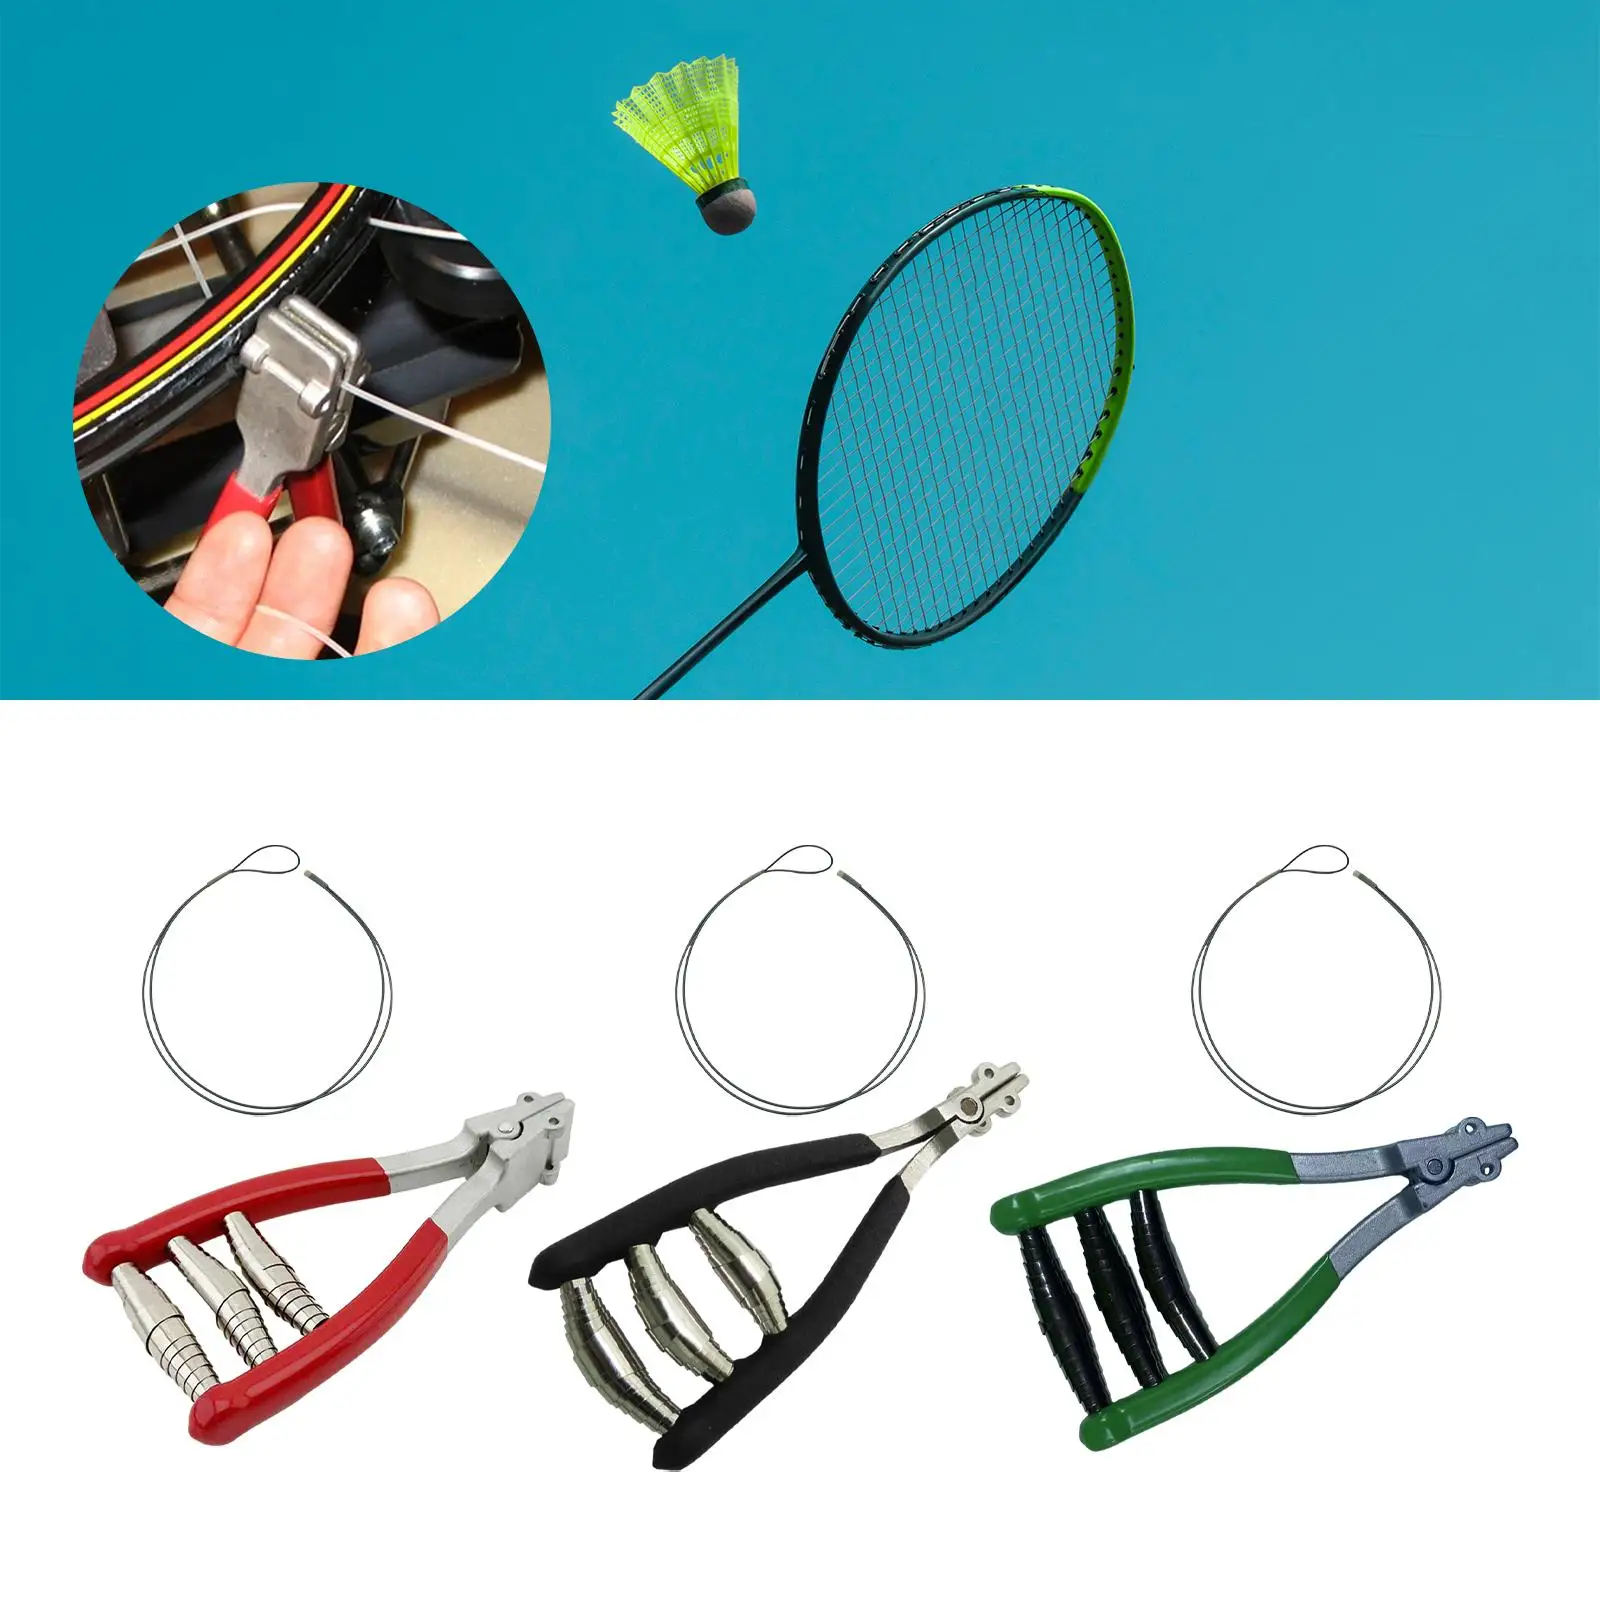 Starting Clamp Badminton Starting Stringing Clamp Clamping Tool Tennis Equipment for Squash Badminton Racket Tennis Accessories